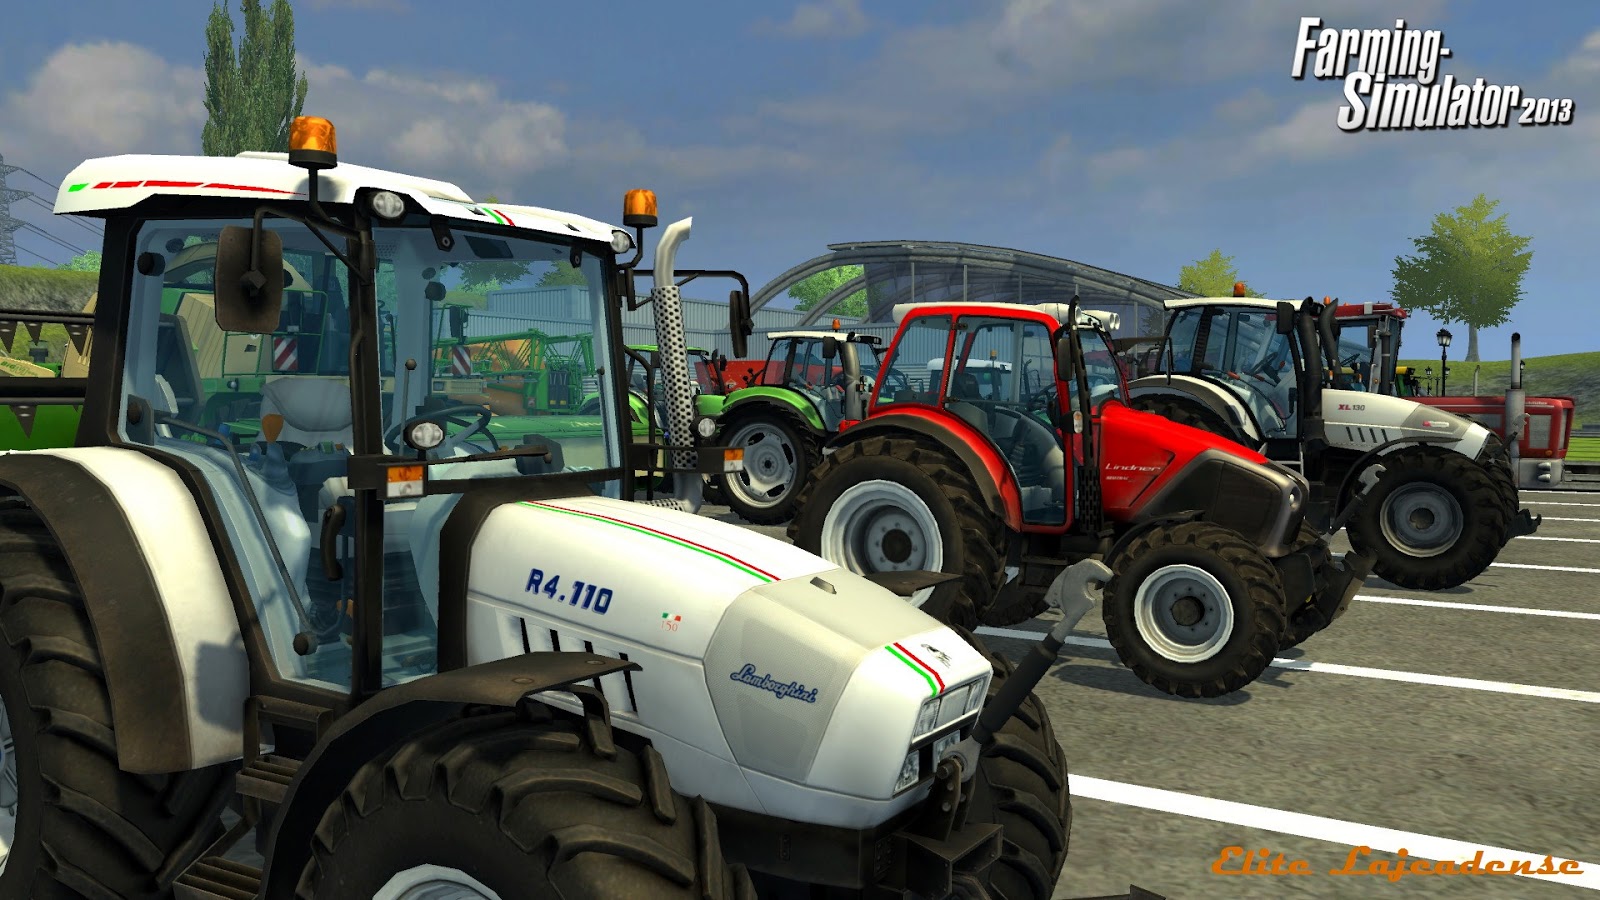 Farming simulator 2013 iso download tpb